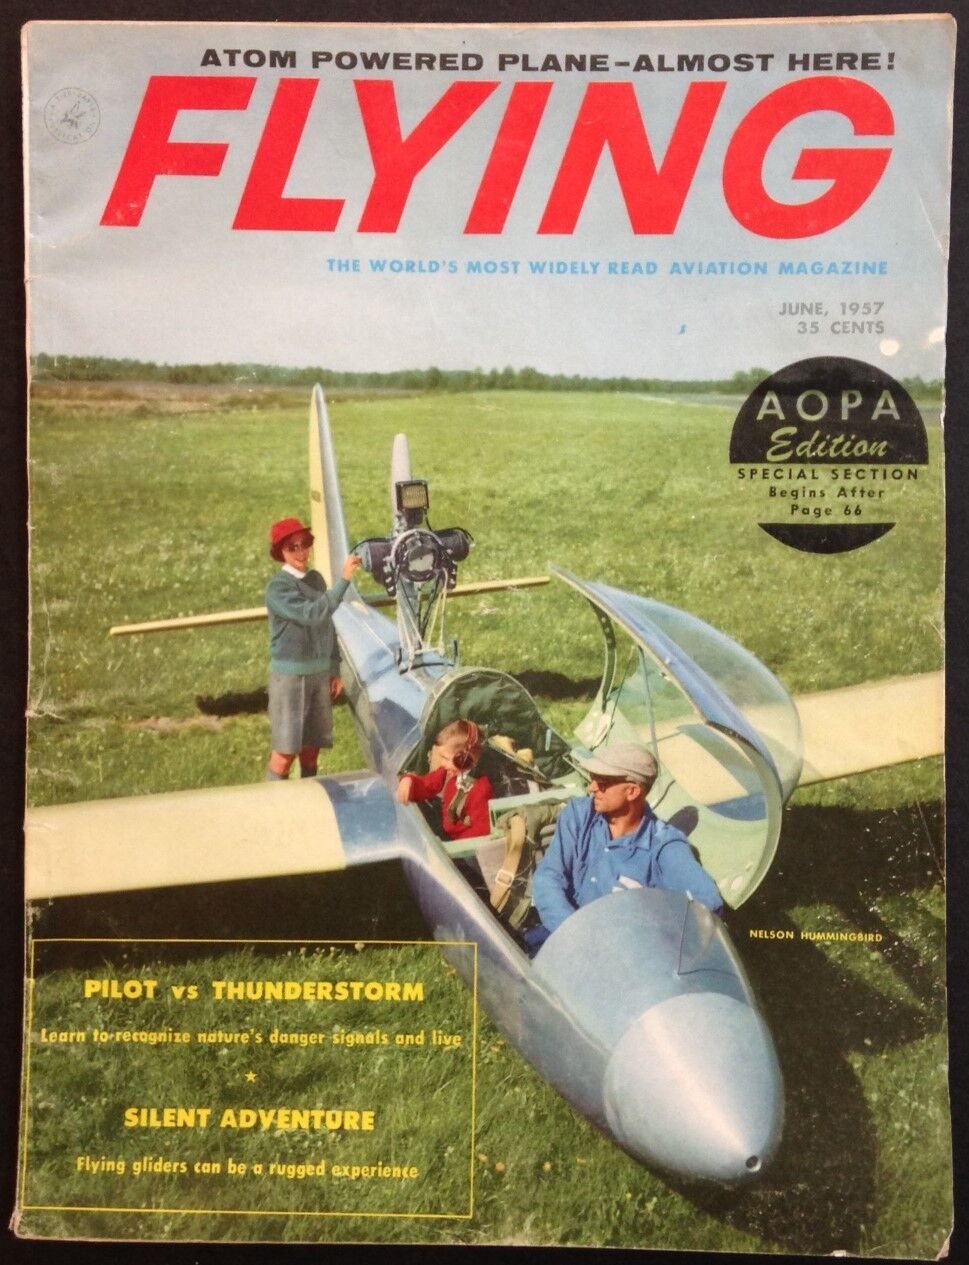 FLYING Magazine, June 1957, Military & Civil Aviation, Gliding, Thunderstorms